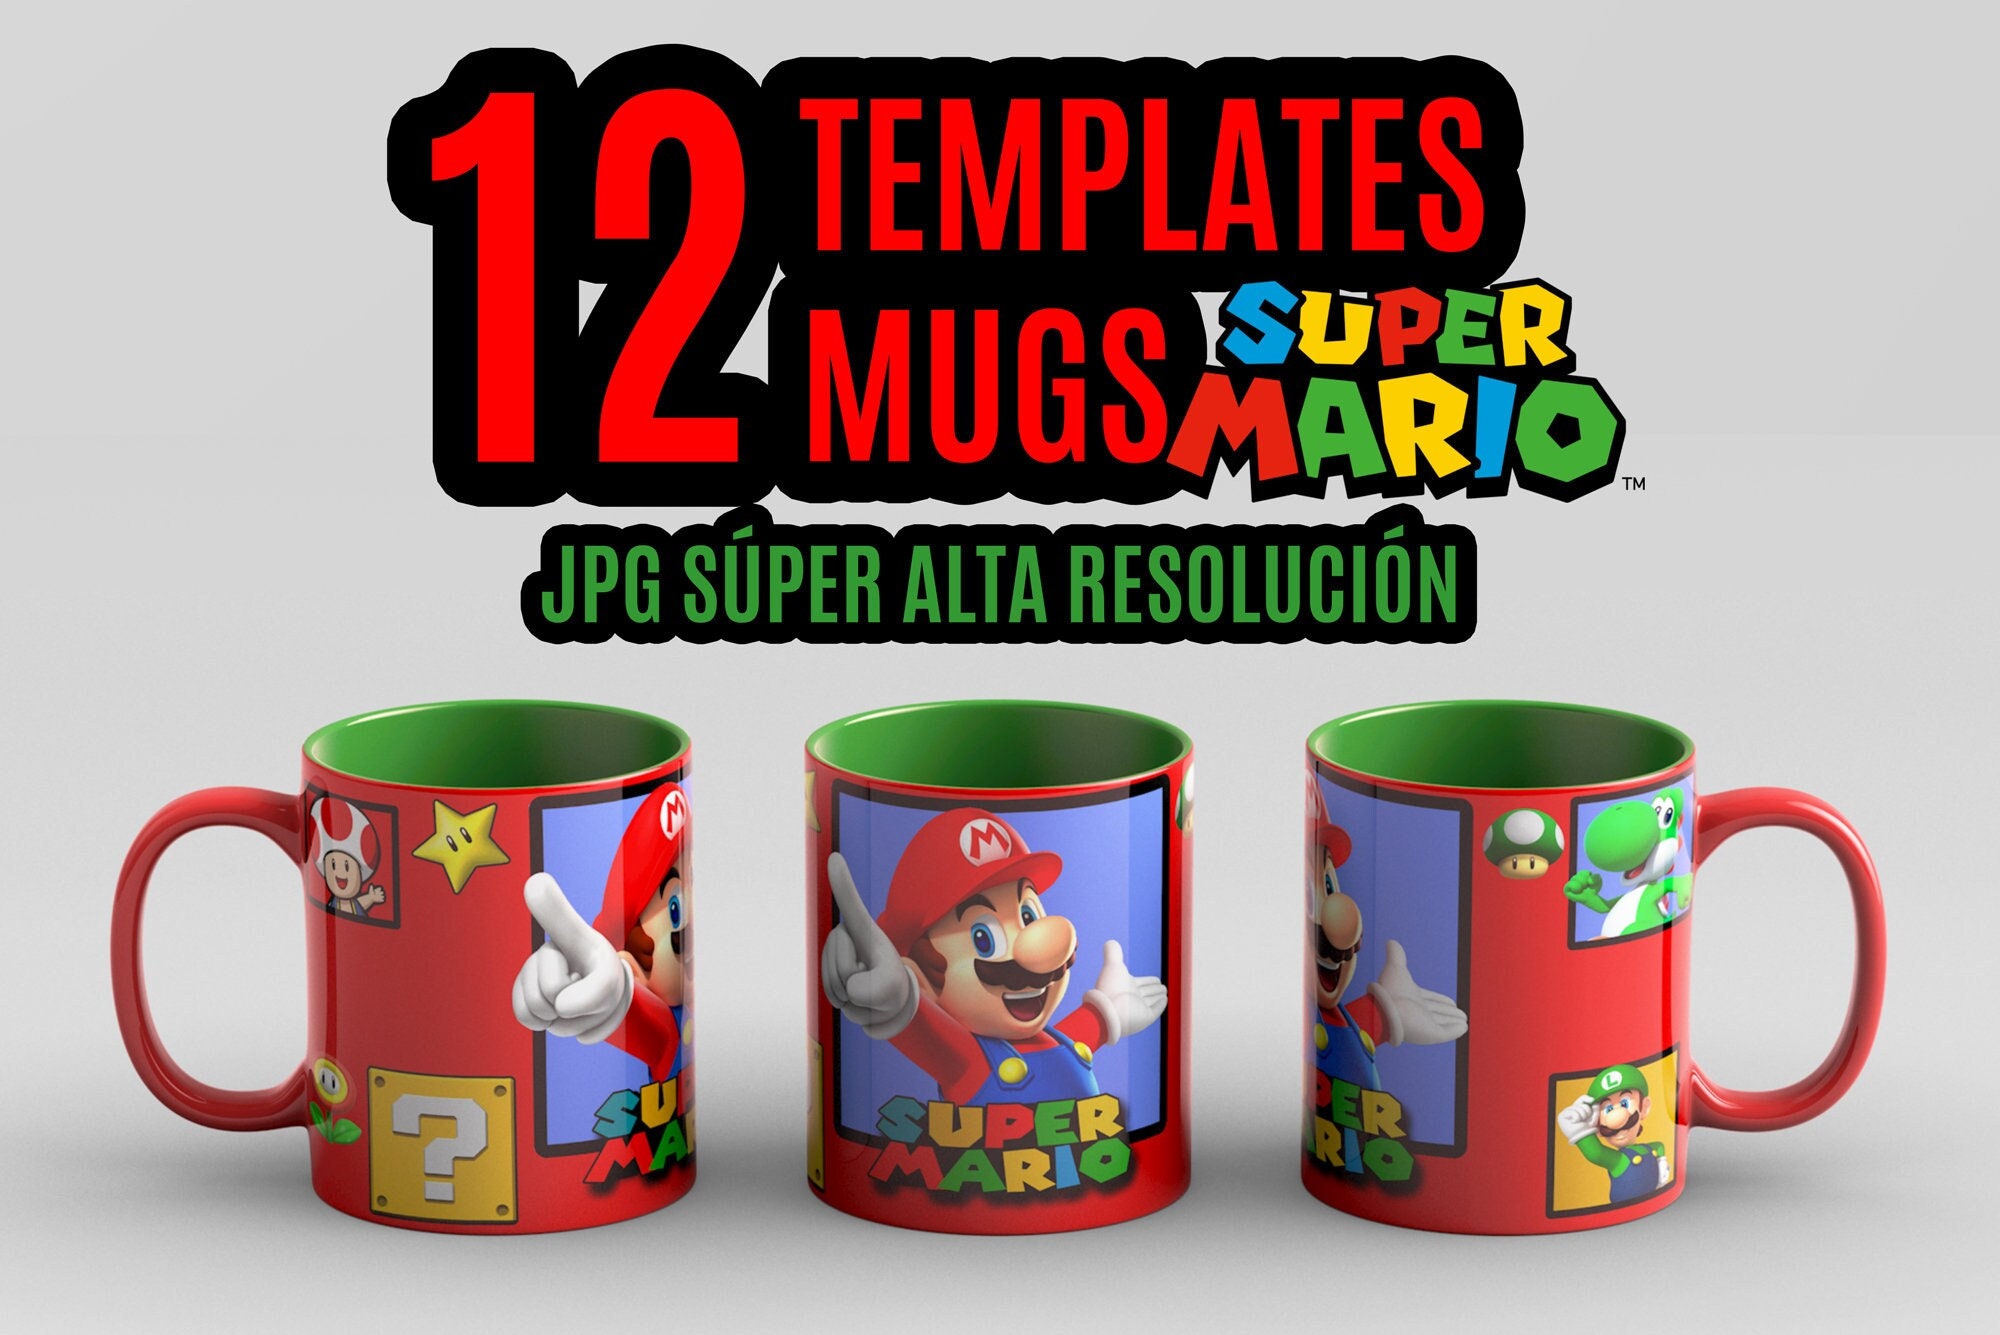 Ceramic Mug Breakfast 400 ml Super Mario in Gift Box, Black, Medium